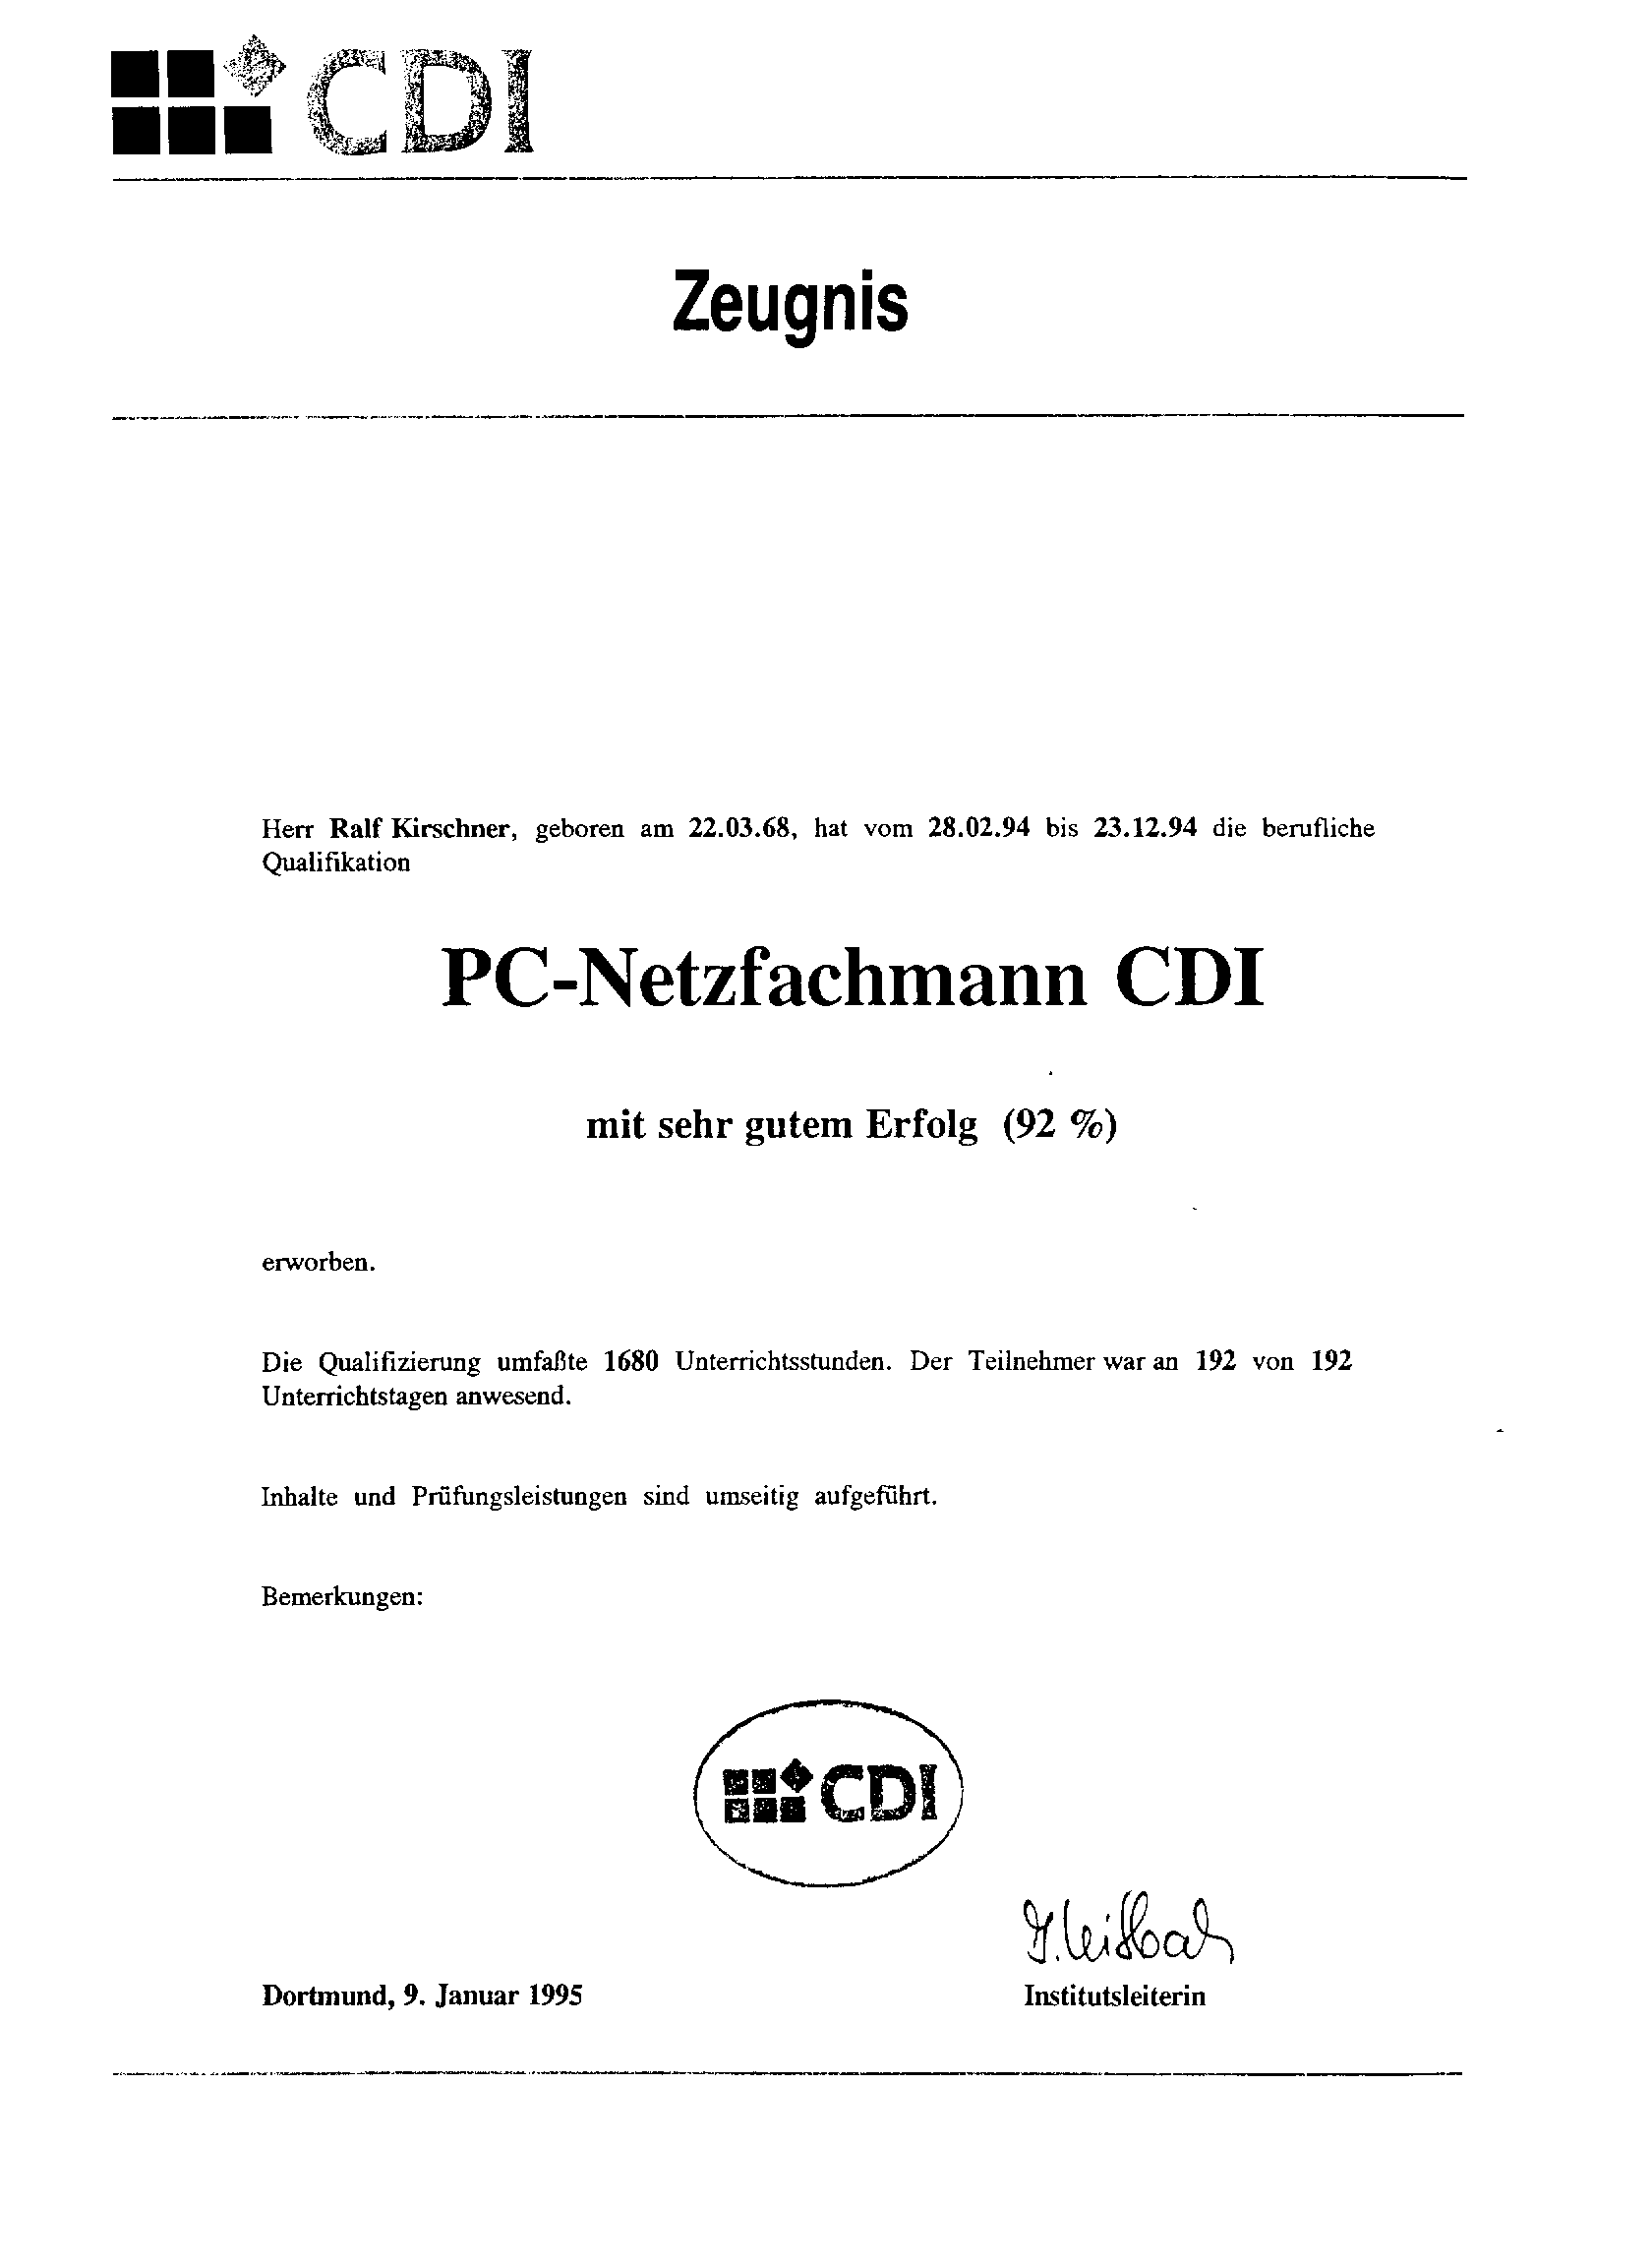 Zeugnis Netzfachmann CDI_1